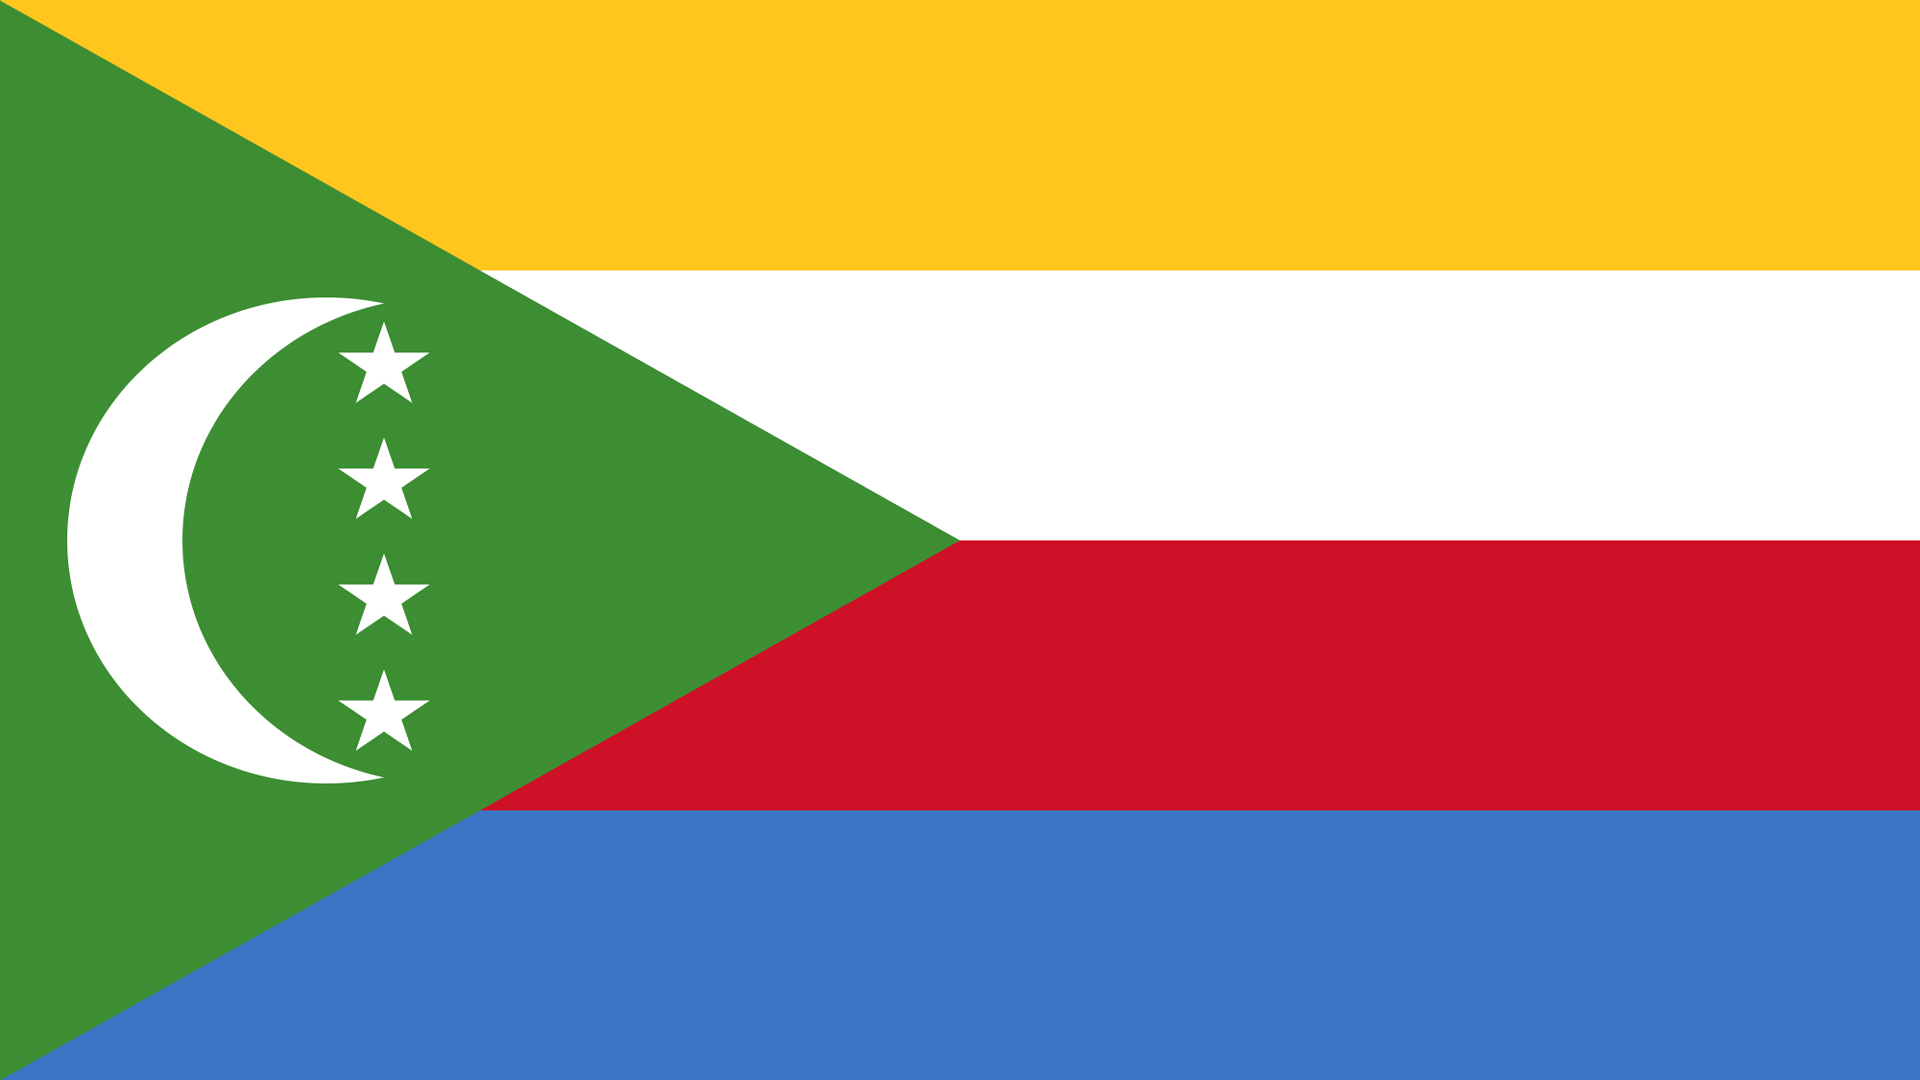 Comoros Flag - Wallpaper, High Definition, High Quality, Widescreen